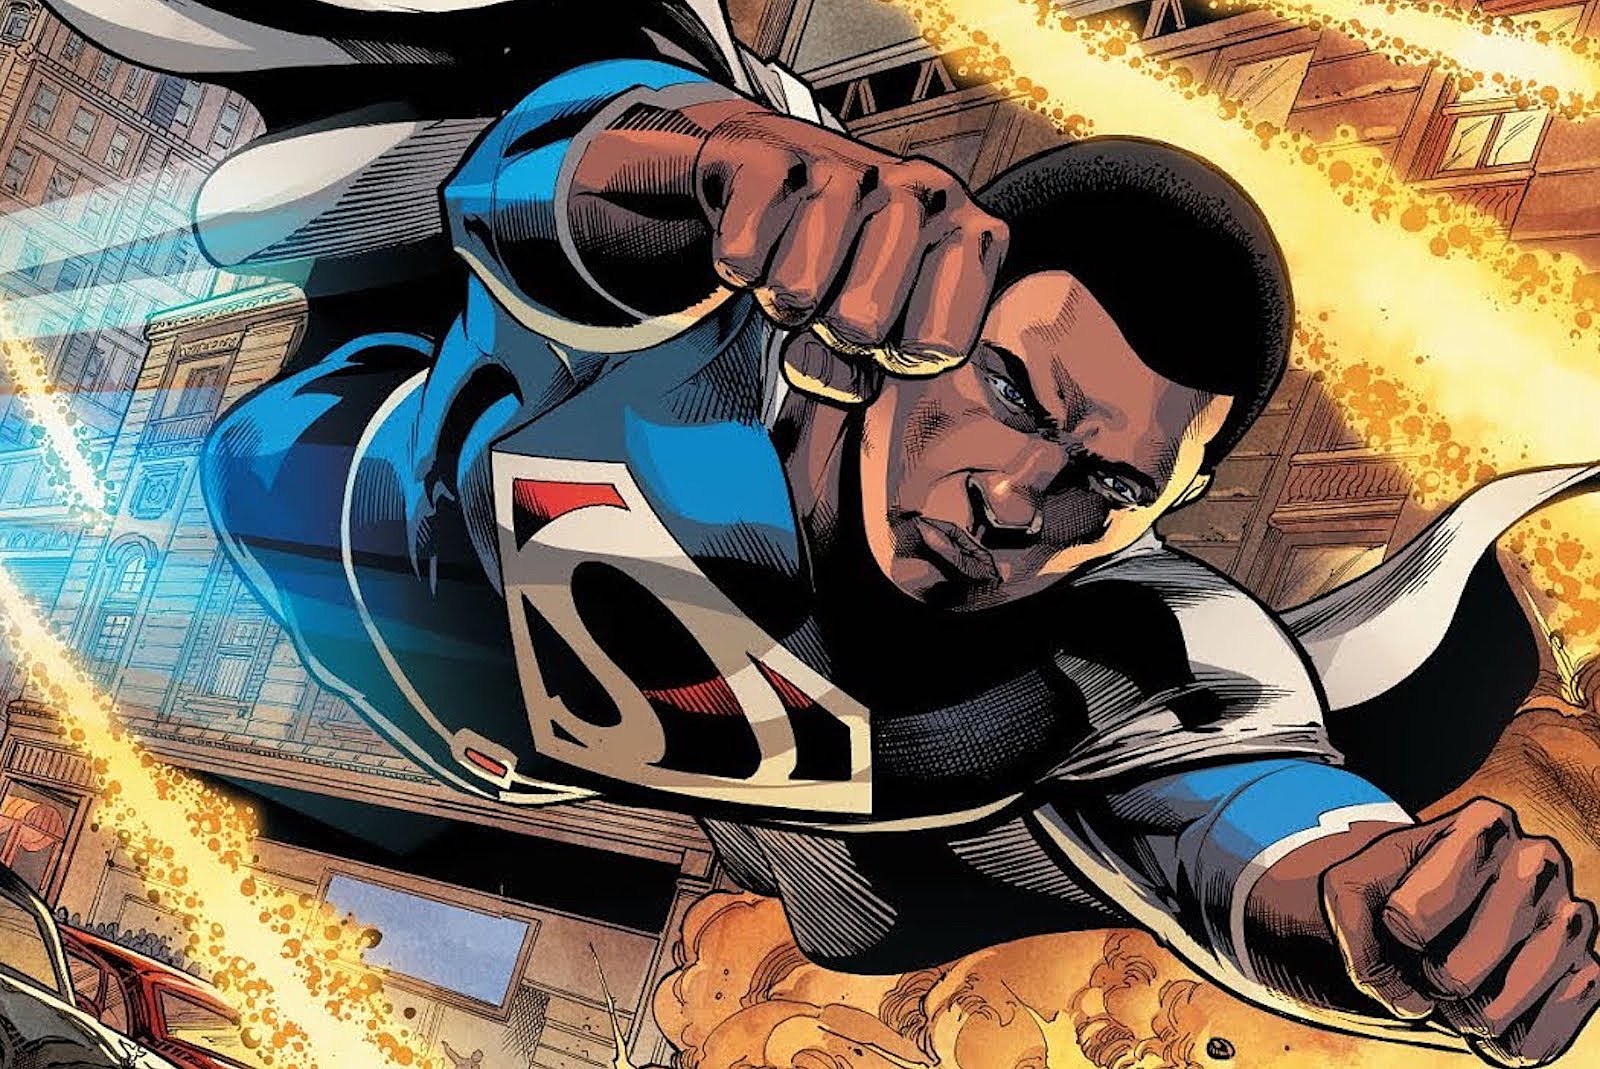 Warner Bros Next Superman Film Will Focus On A Black Superman